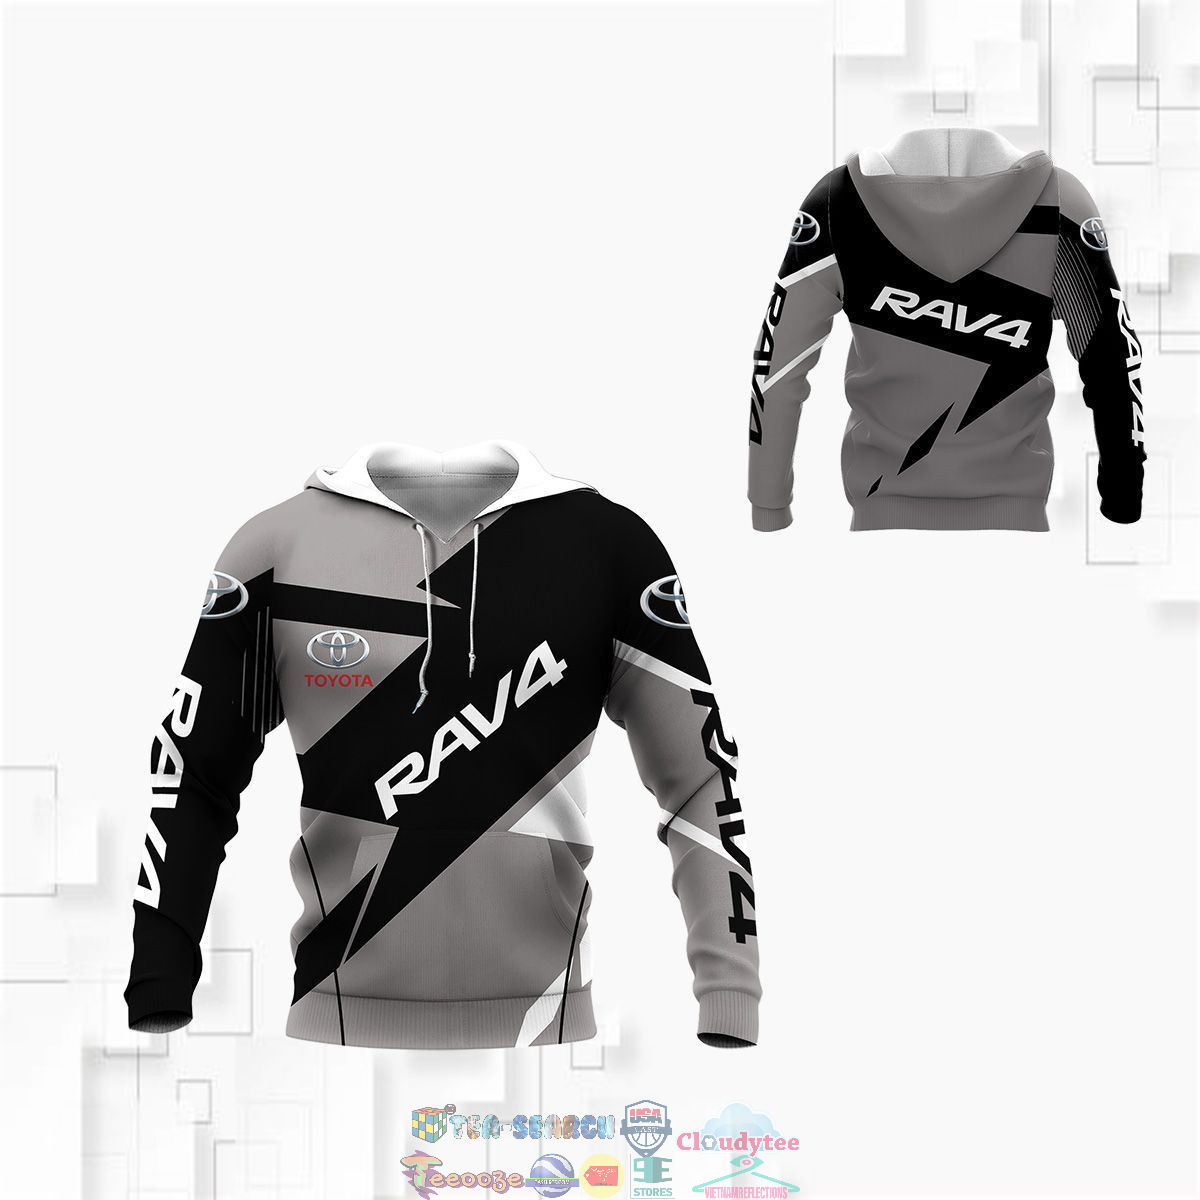 Toyota Rav4 ver 6 hoodie and t-shirt – Saleoff